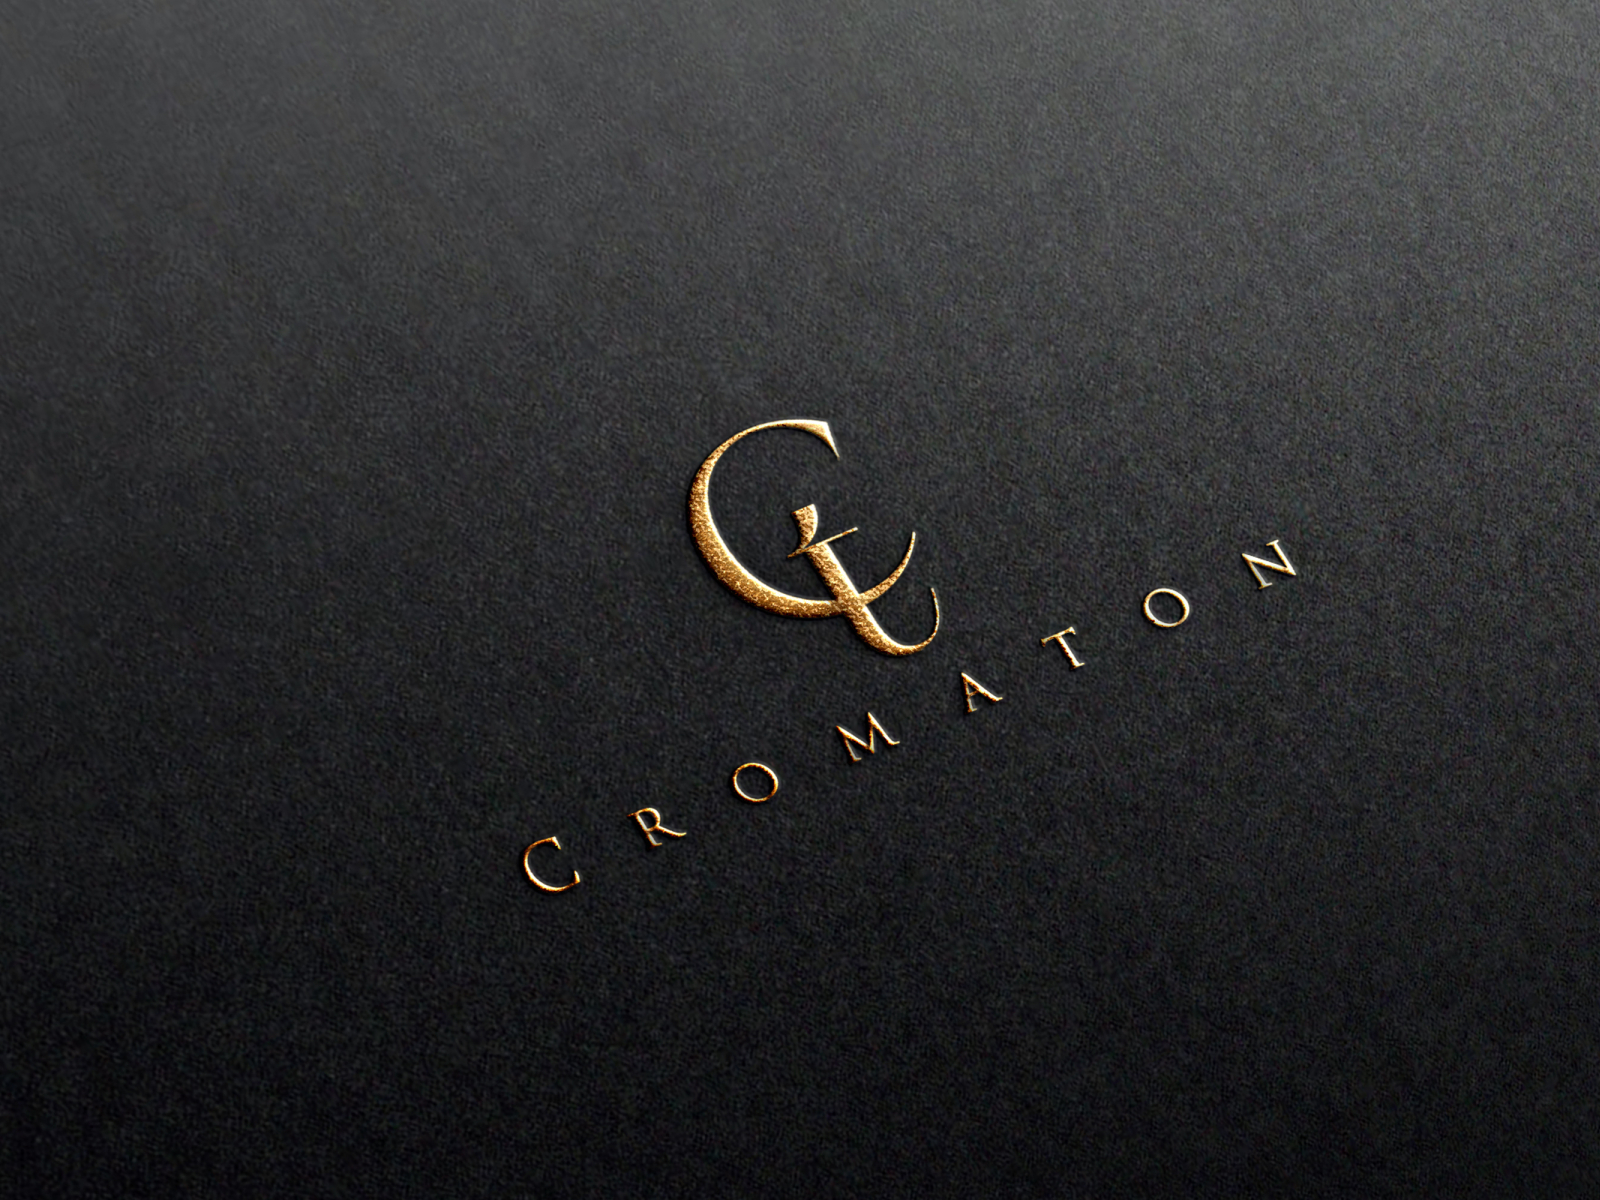 Cromaton logo by Ijudigal Isaac on Dribbble